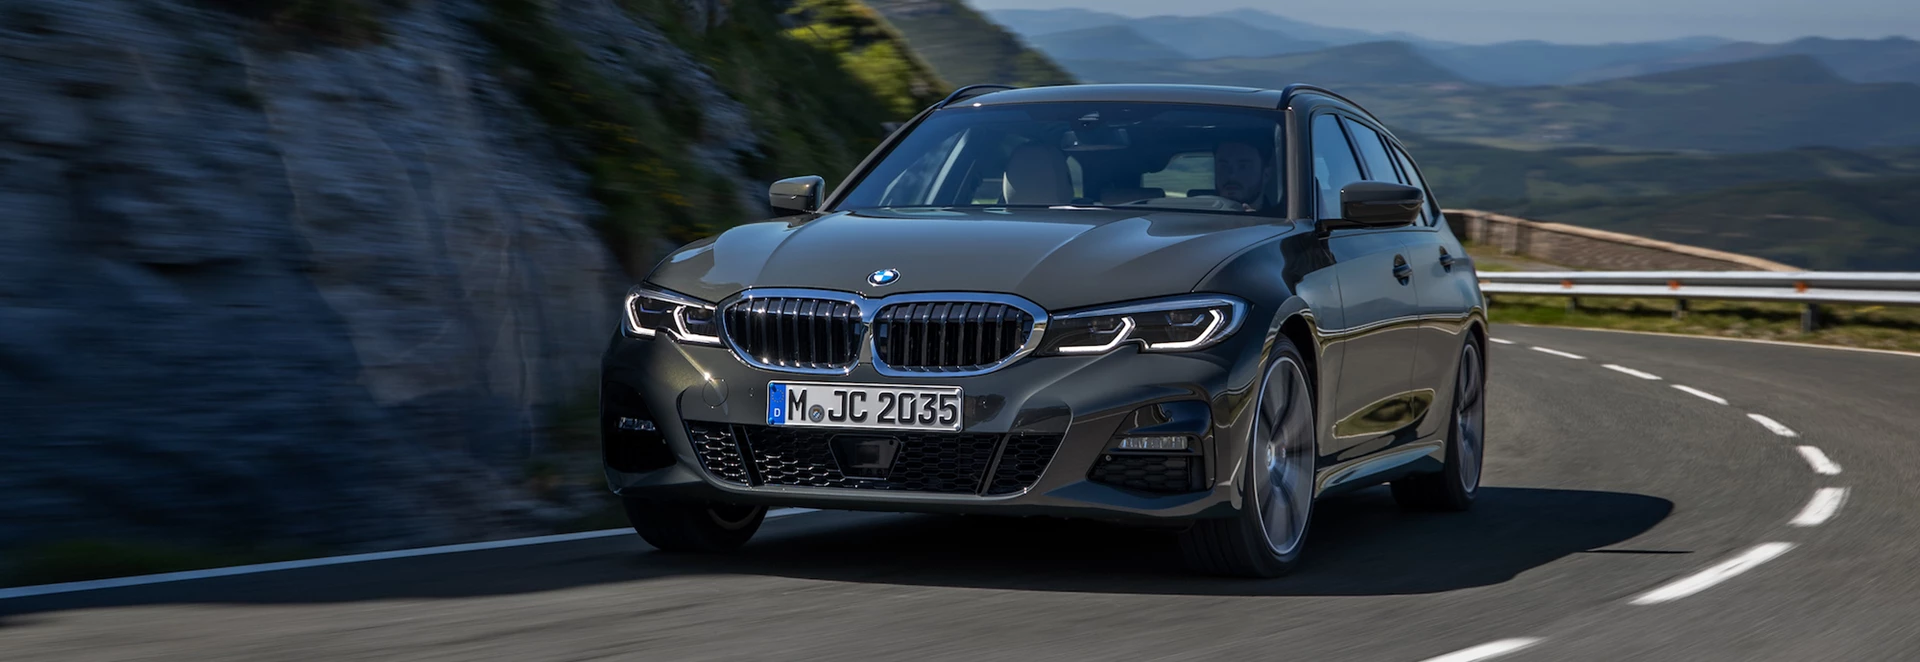 2019 BMW 3 Series Touring revealed ahead of Frankfurt Motor Show debut